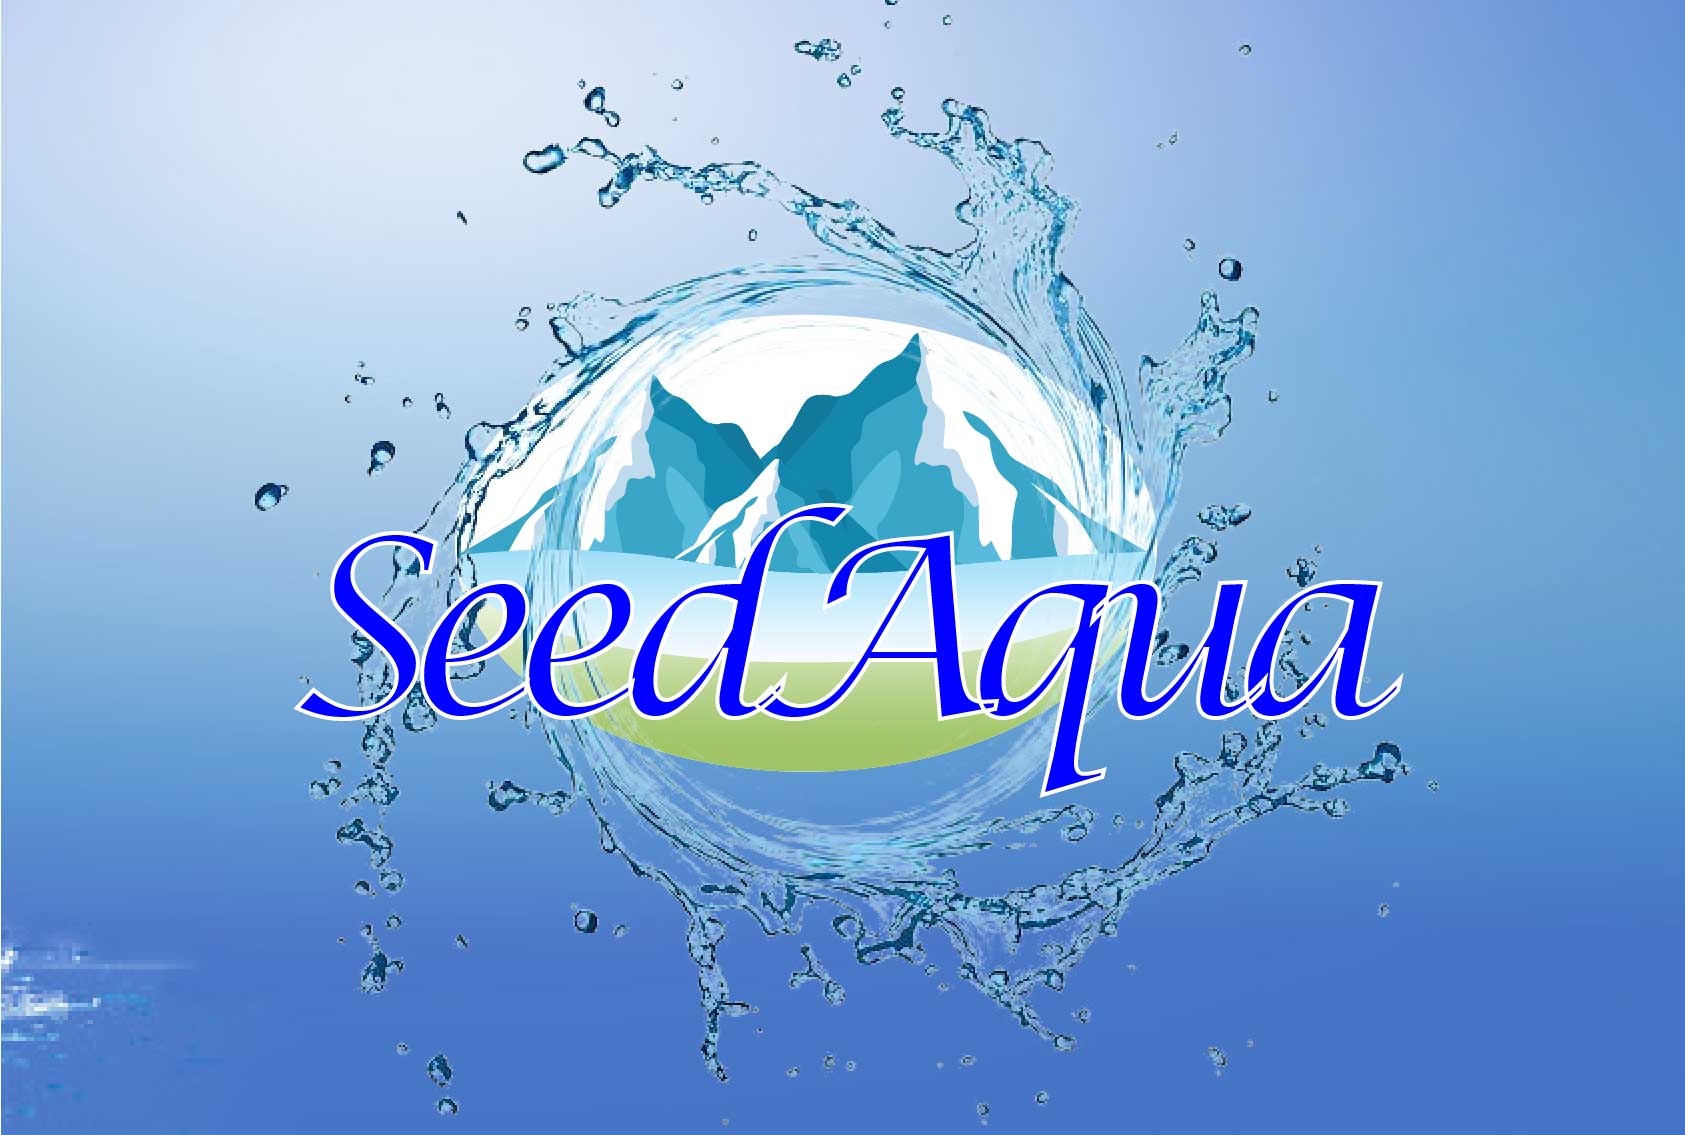 SeedAqua Blue logo